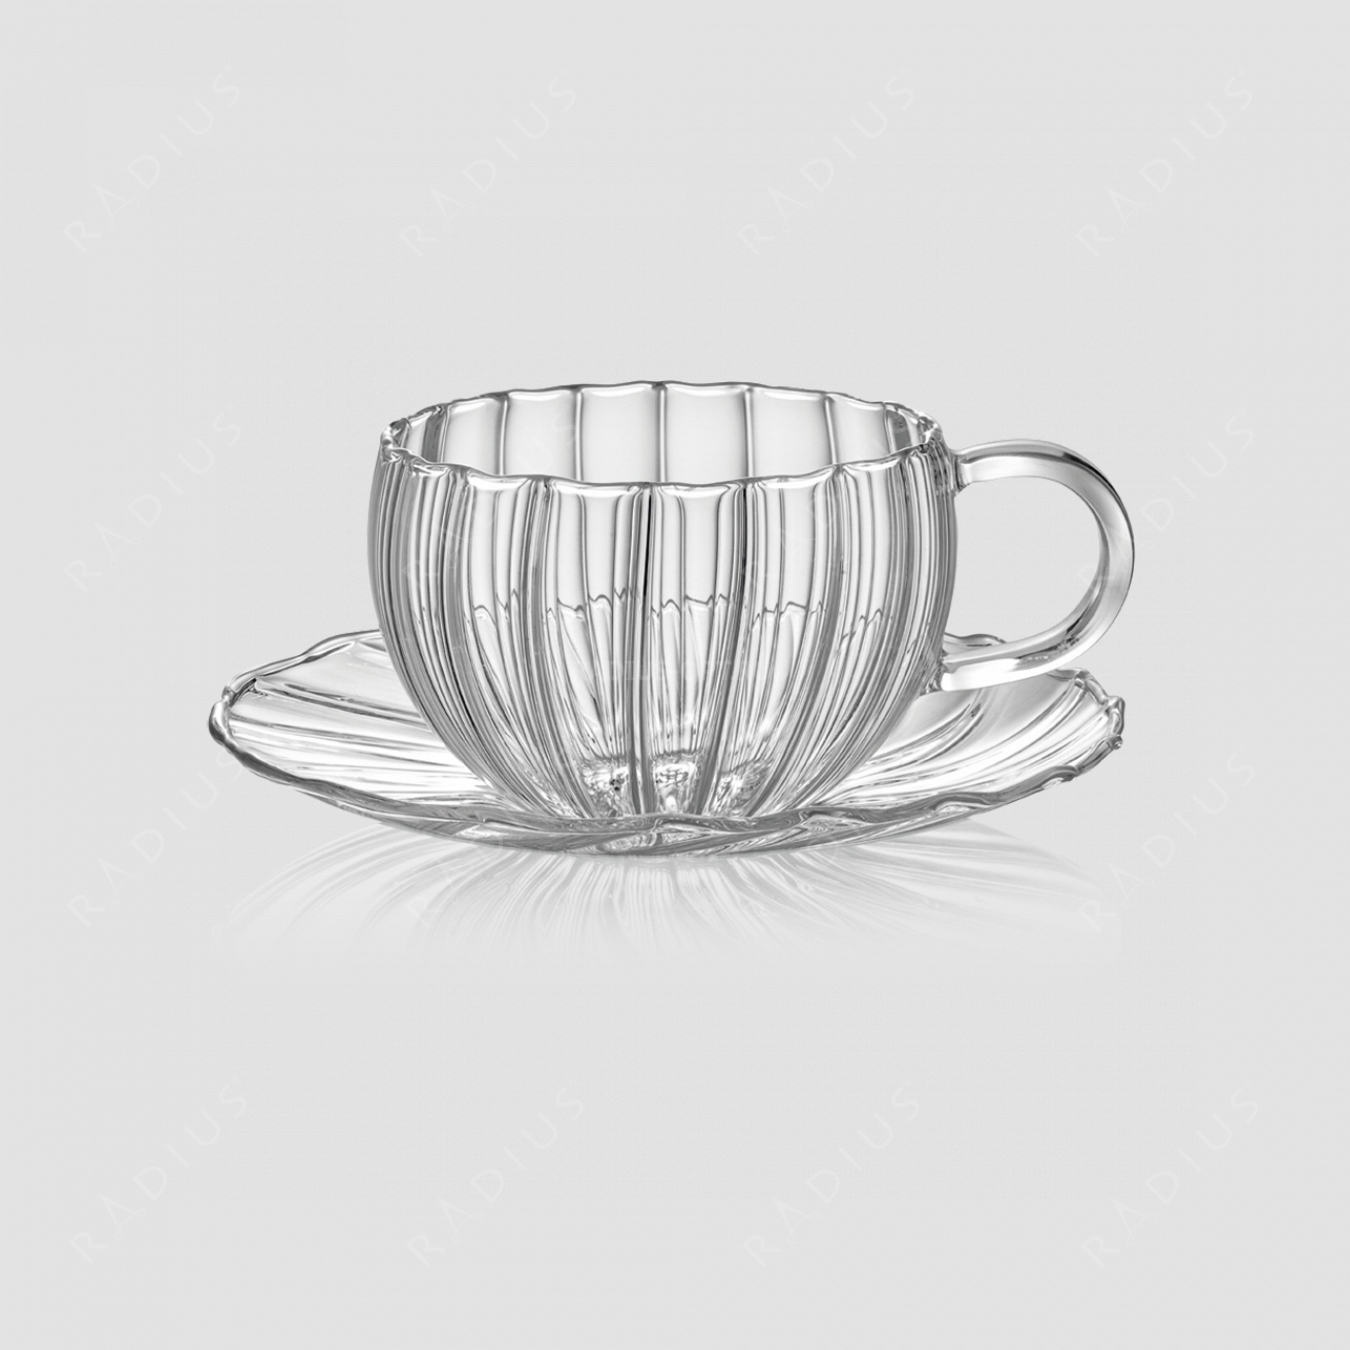 Набор для чая: две чашки, объем: 240 мл и два блюдца, материал: 15,8 см, материал: стекло, серия Coffee&Tea, IVV (Italy), Италия